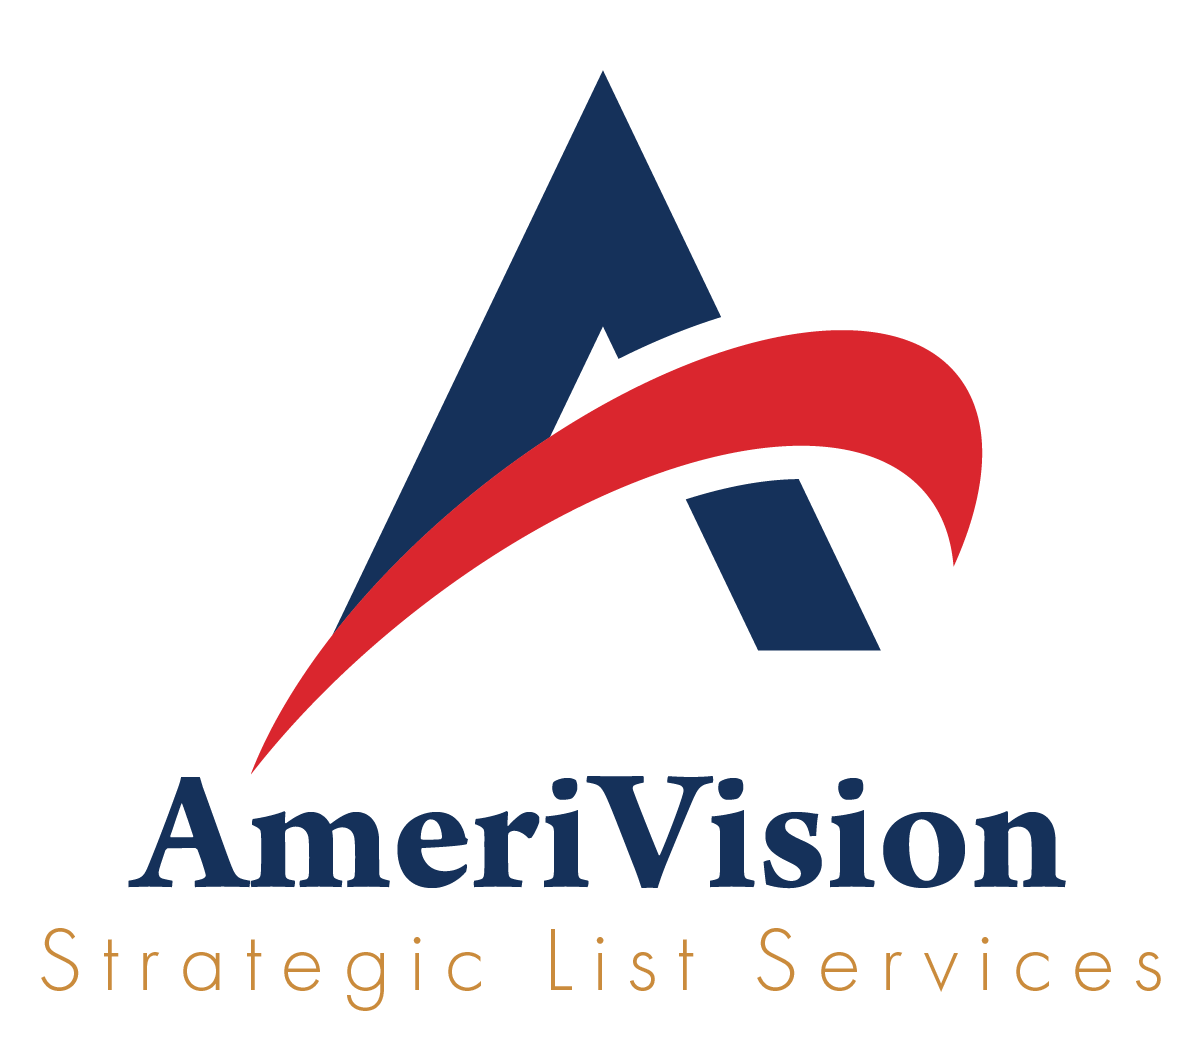 AmeriVision Strategic List Services